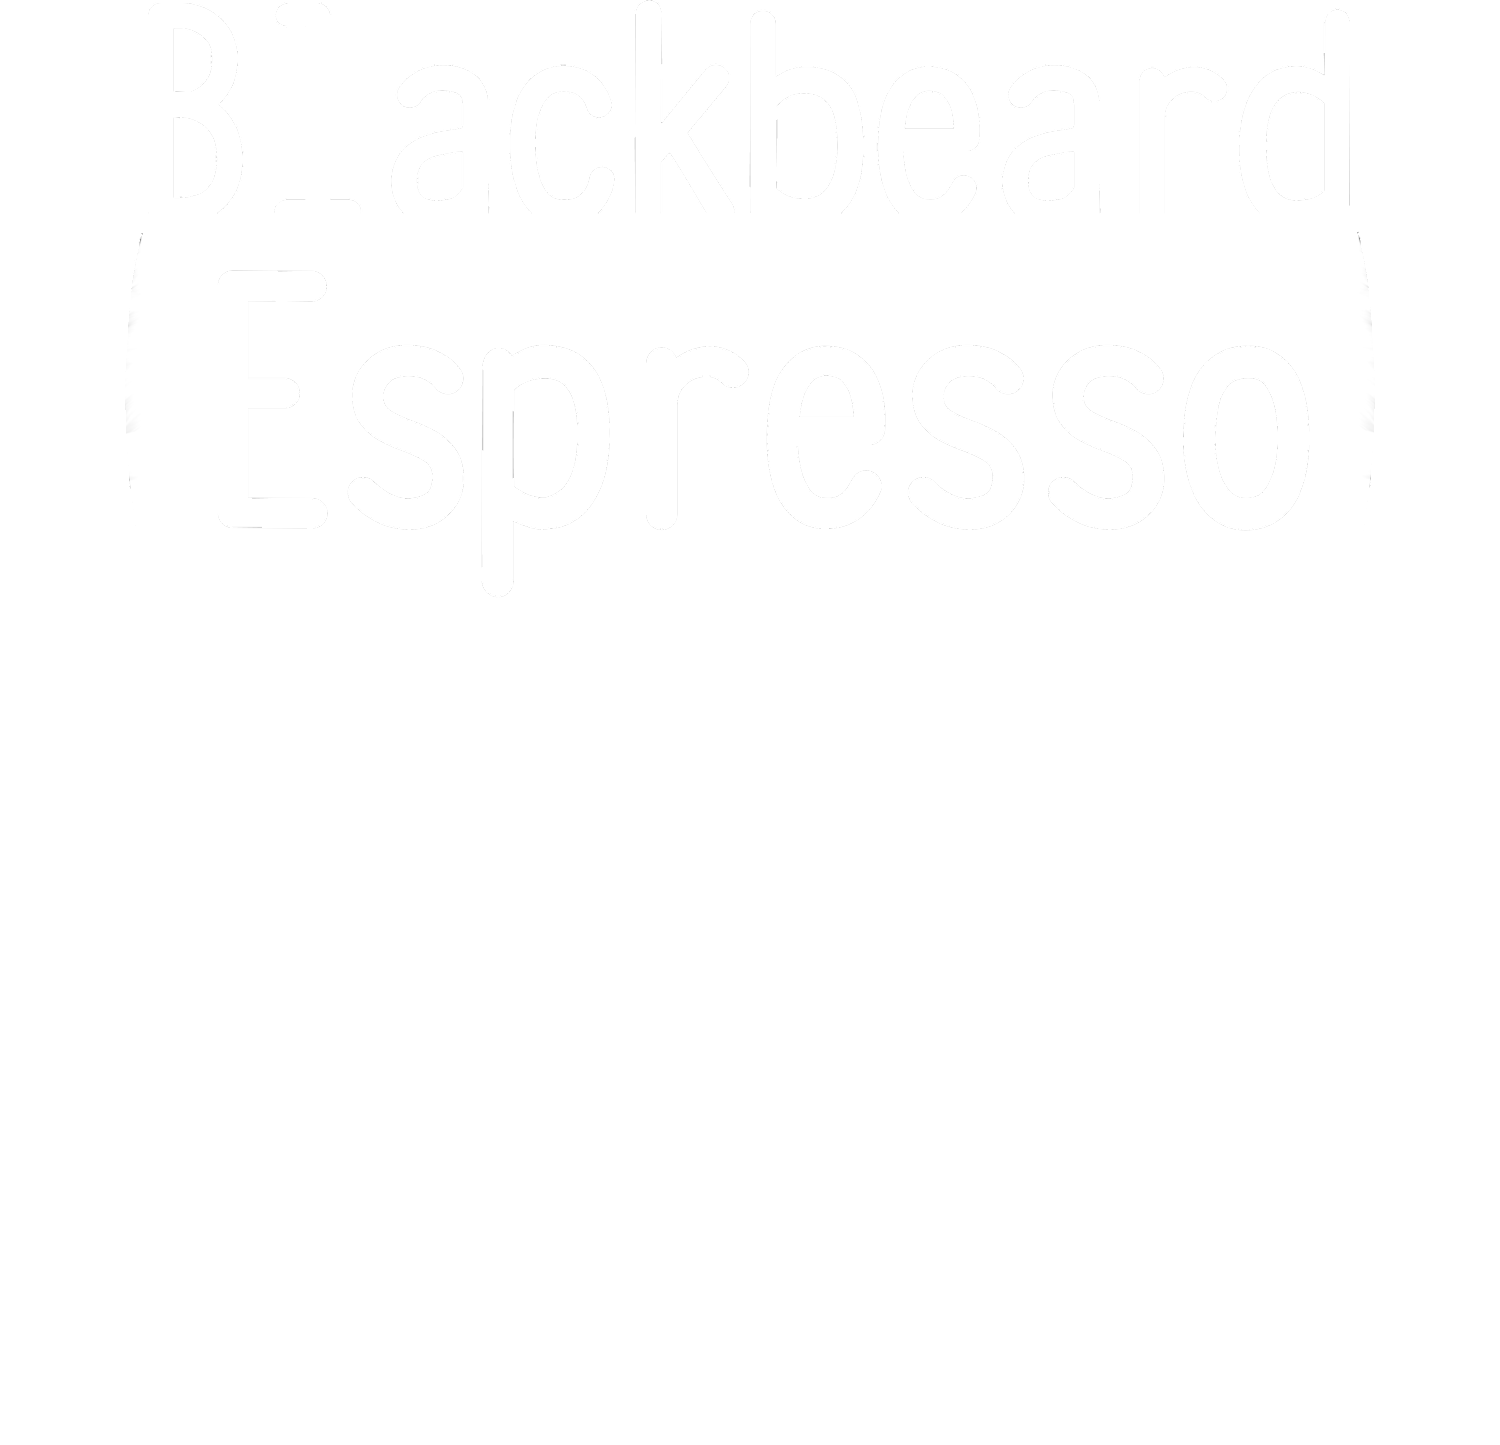 Blackbeard Espresso 